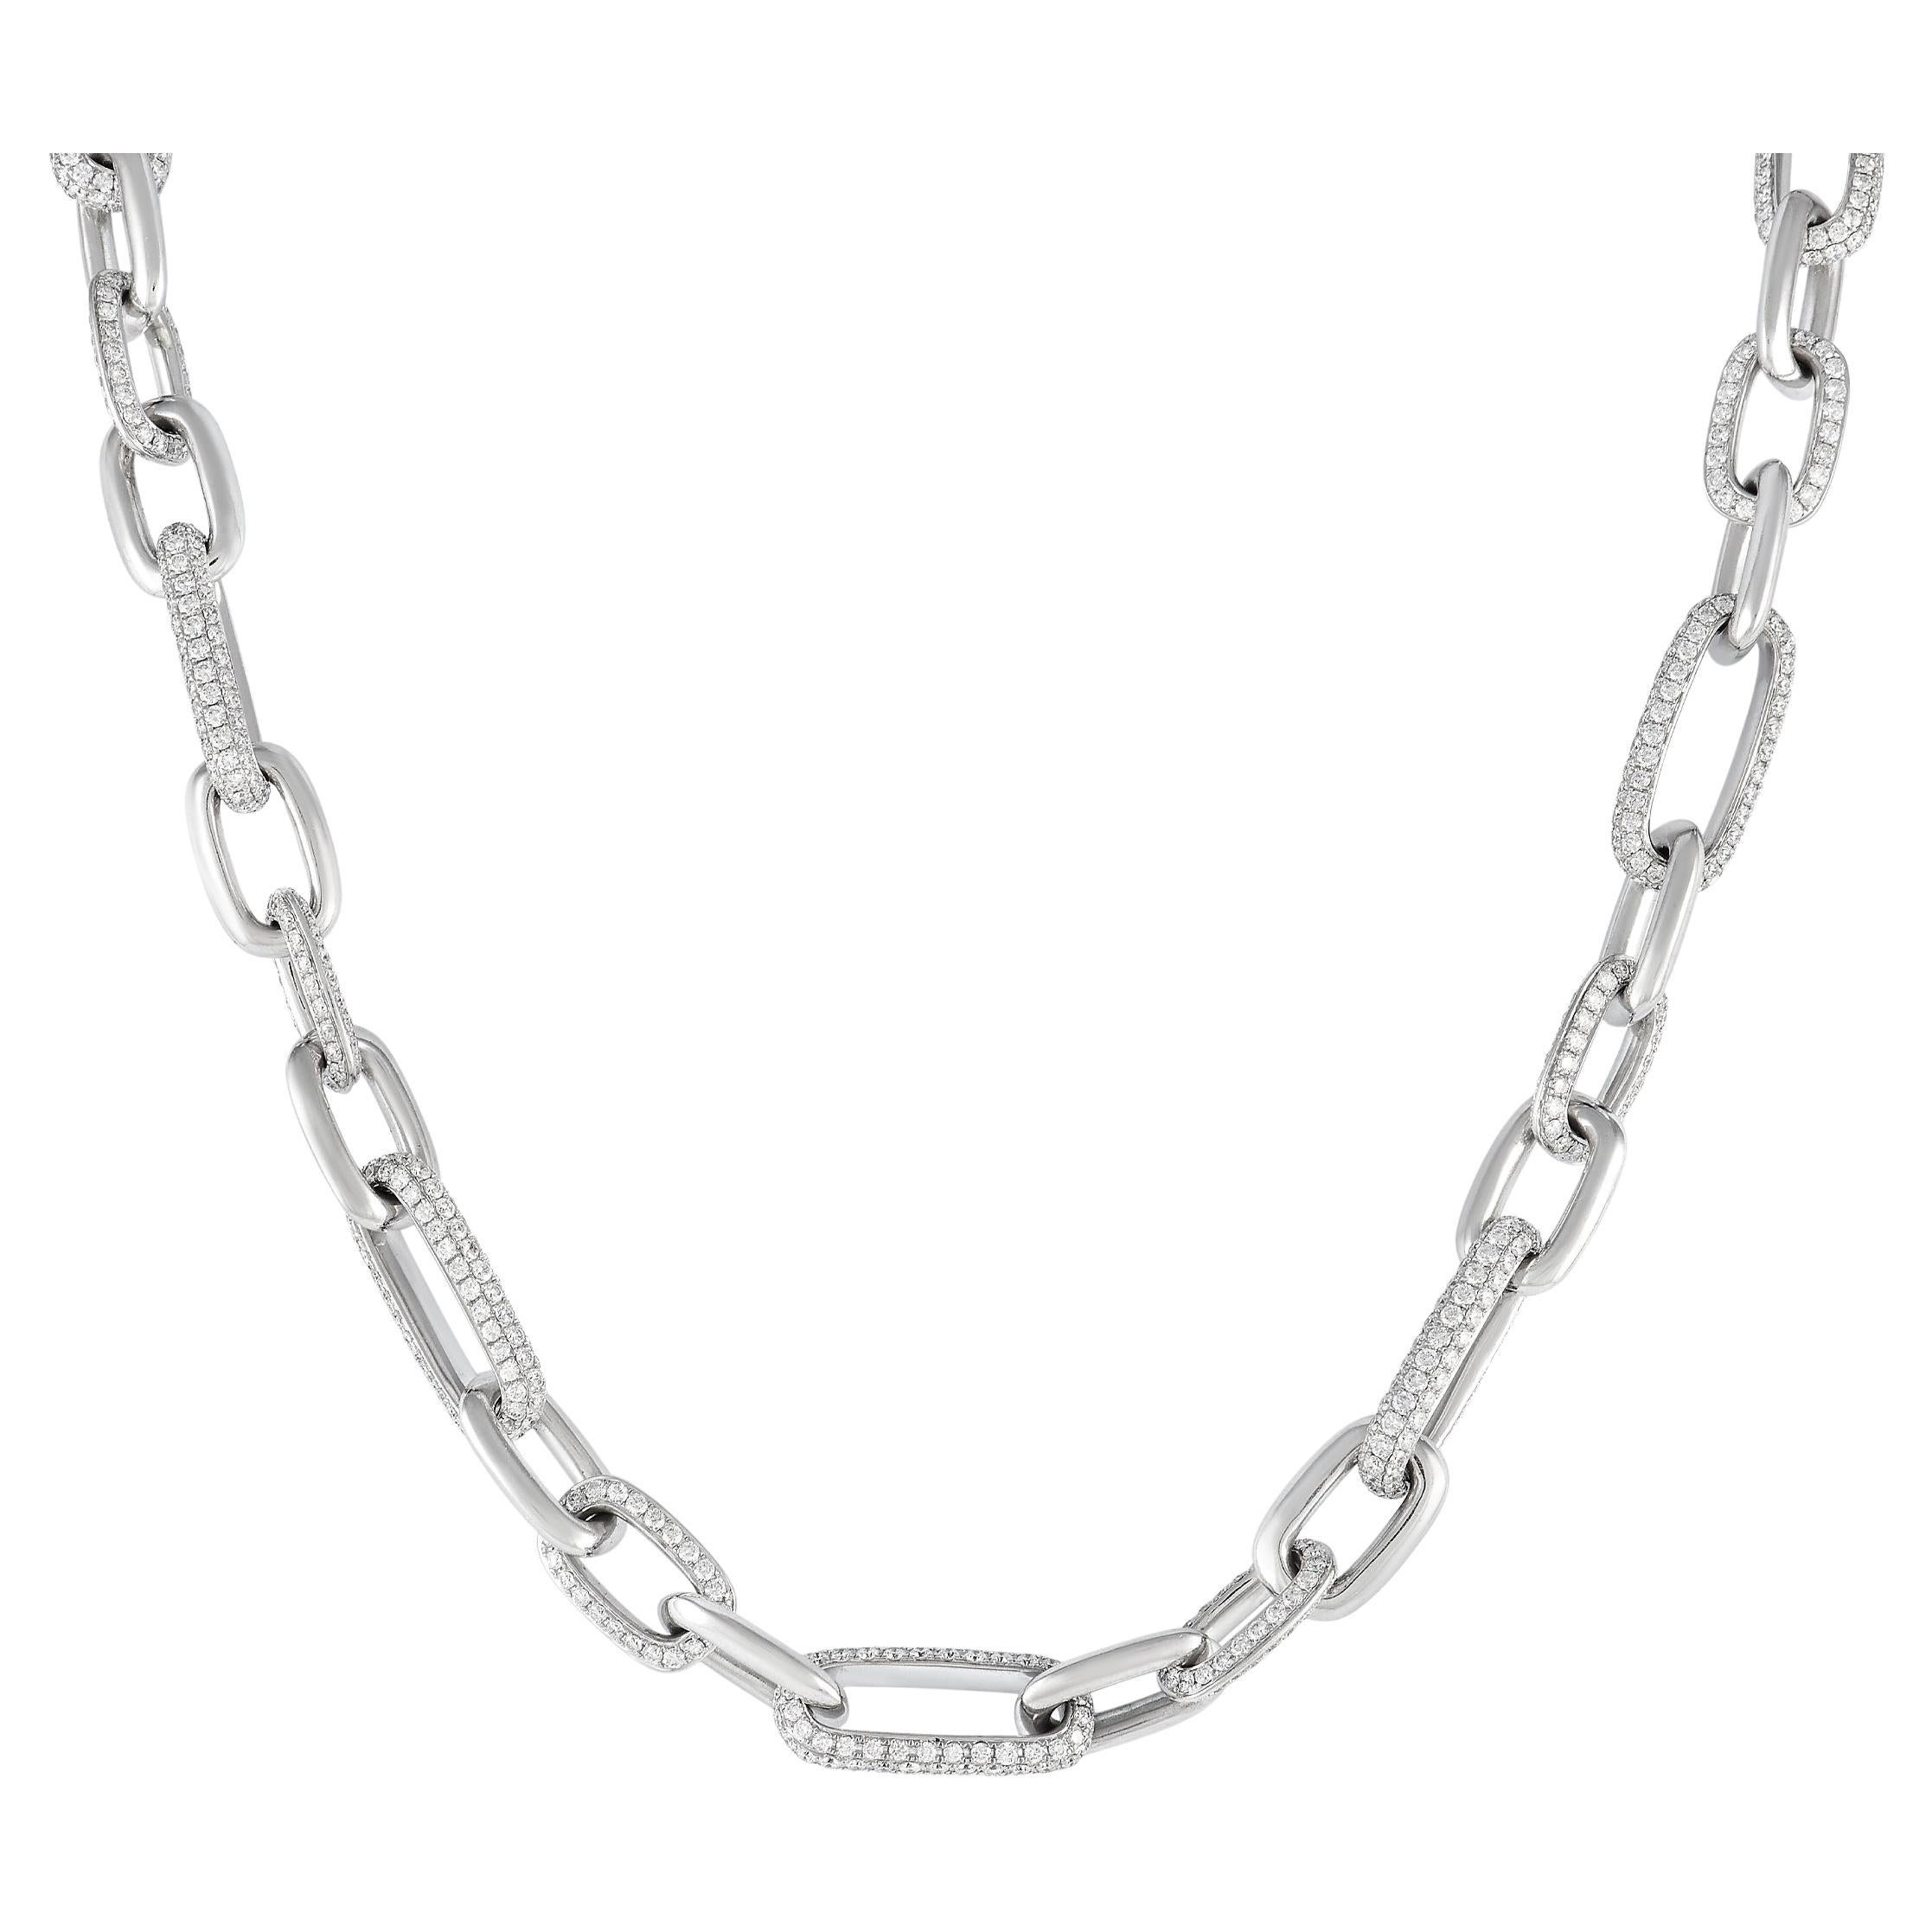 LB Exclusive 18K White Gold 22.25 Ct Diamond Link Necklace